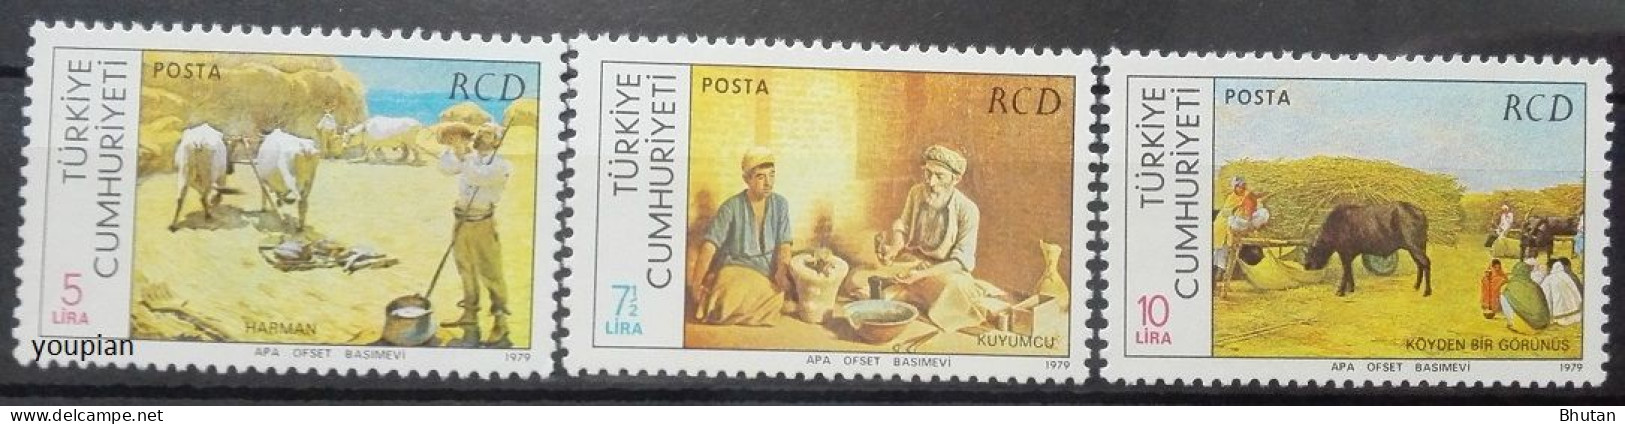 Türkiye 1979, RCD - Paintings From Türkiye, Iran And Pakistan, MNH Stamps Set - Ongebruikt